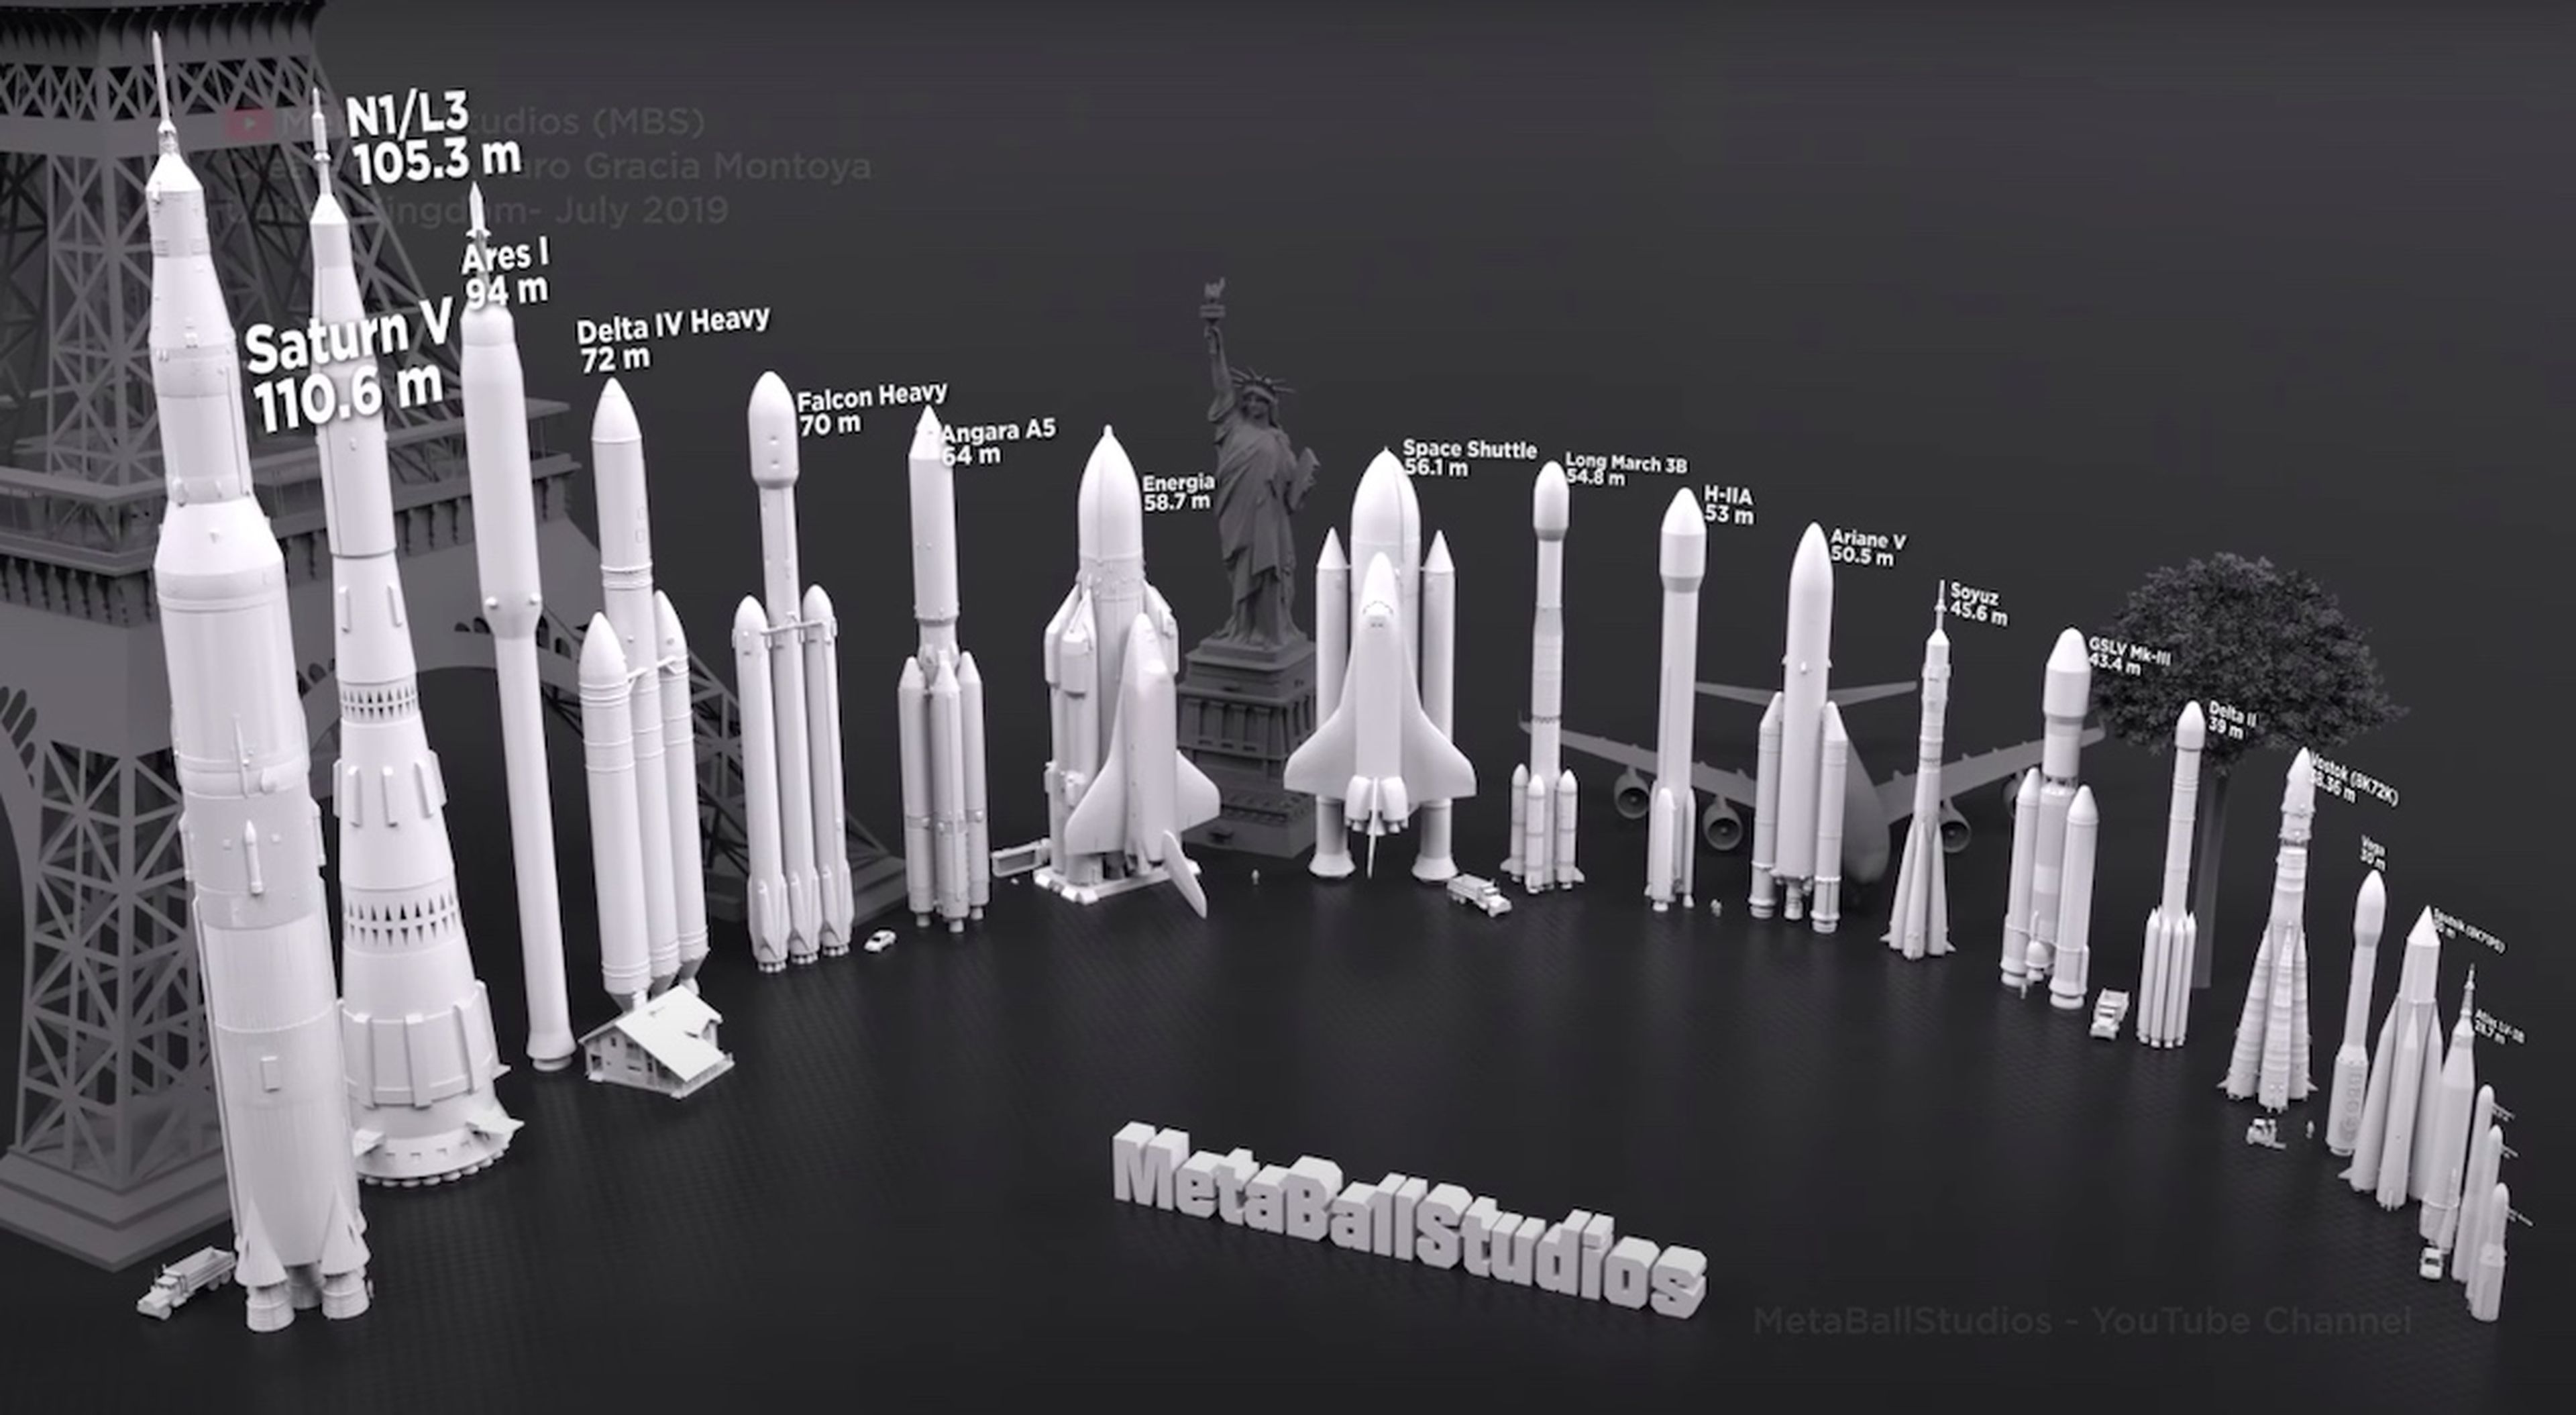 Comparativa del tamaño de cohetes